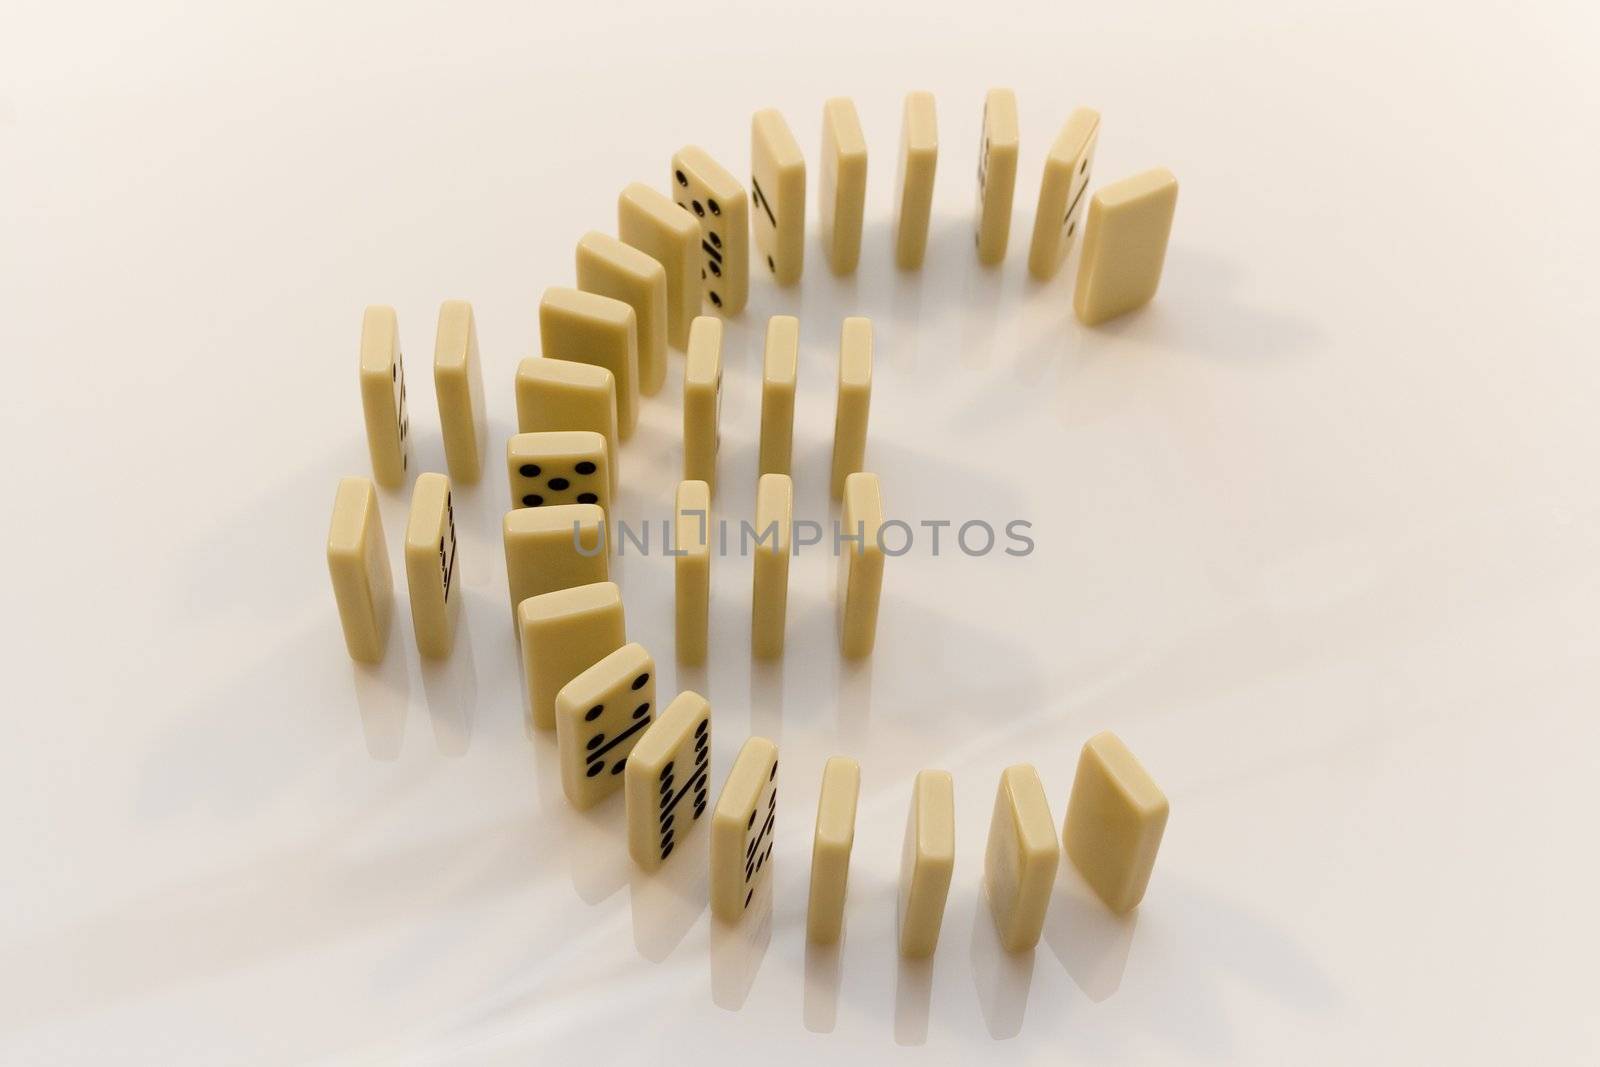 Domino-laying bricks, Perfect idea for fun